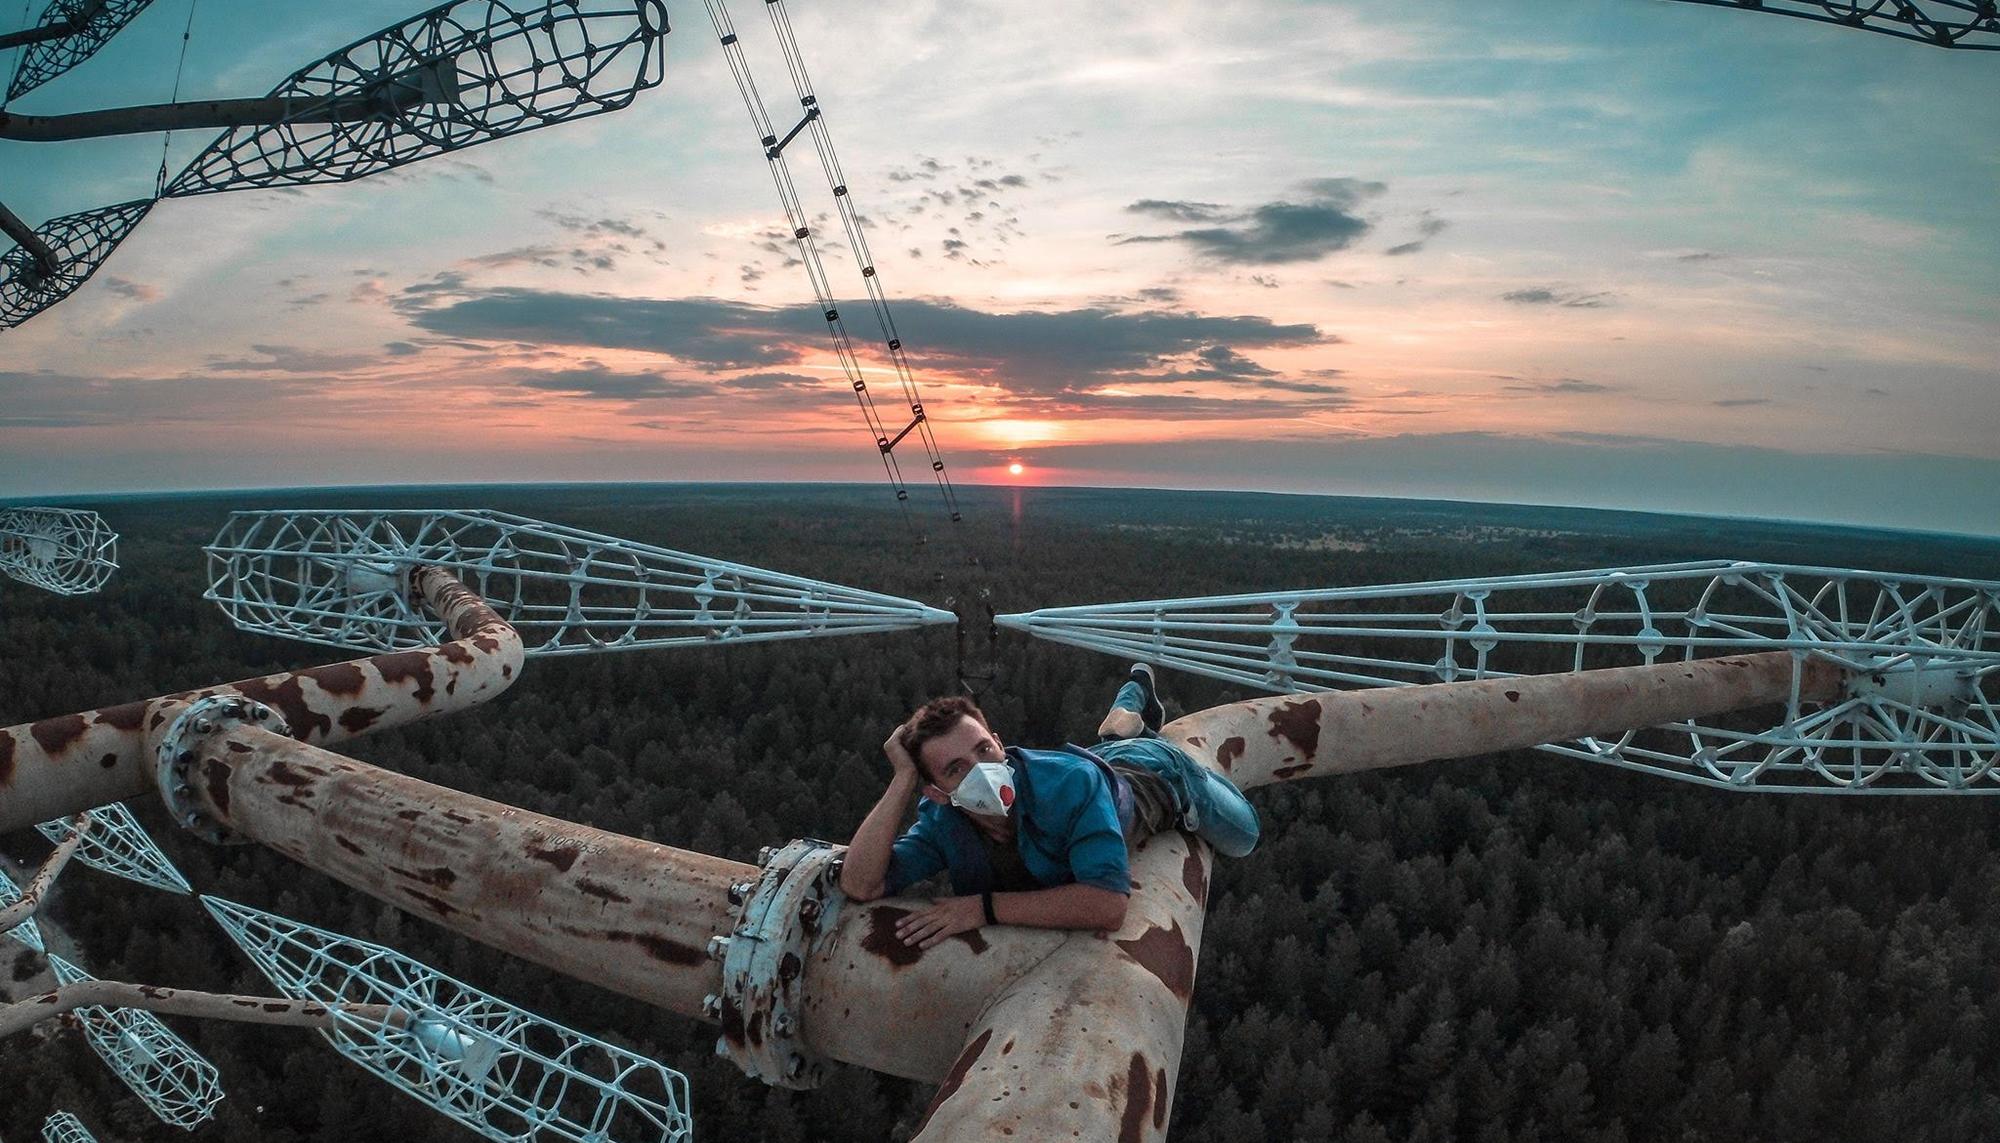 Stalker en la Zona de Exclusión de Chernóbil II. Imagen del documental 'Stalking Chernobyl'.